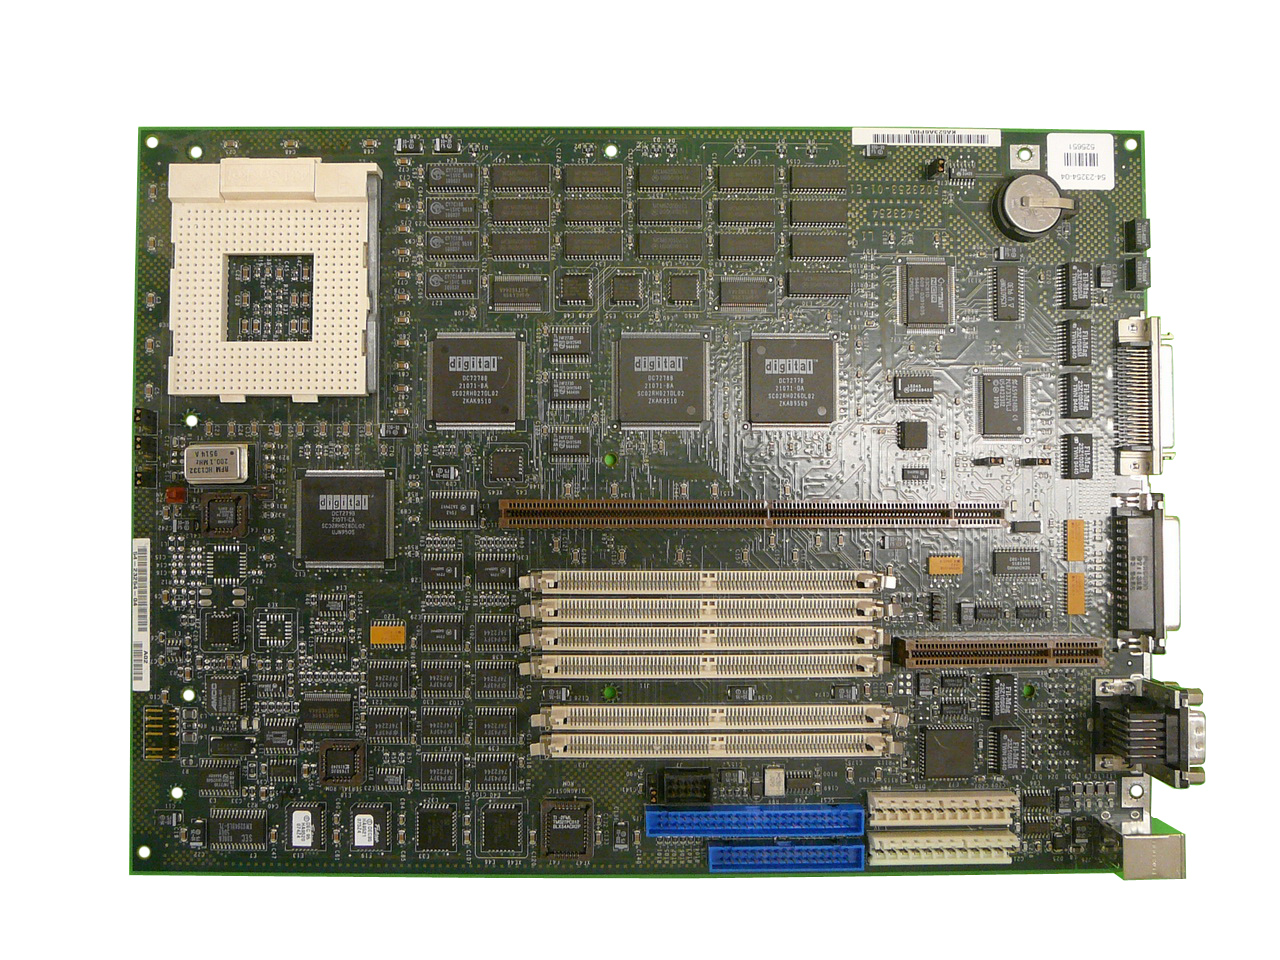 54-23254-04 Digital Equipment (DEC) DEC 100mhz Processor Board for Alphaserver 200 (Refurbished)